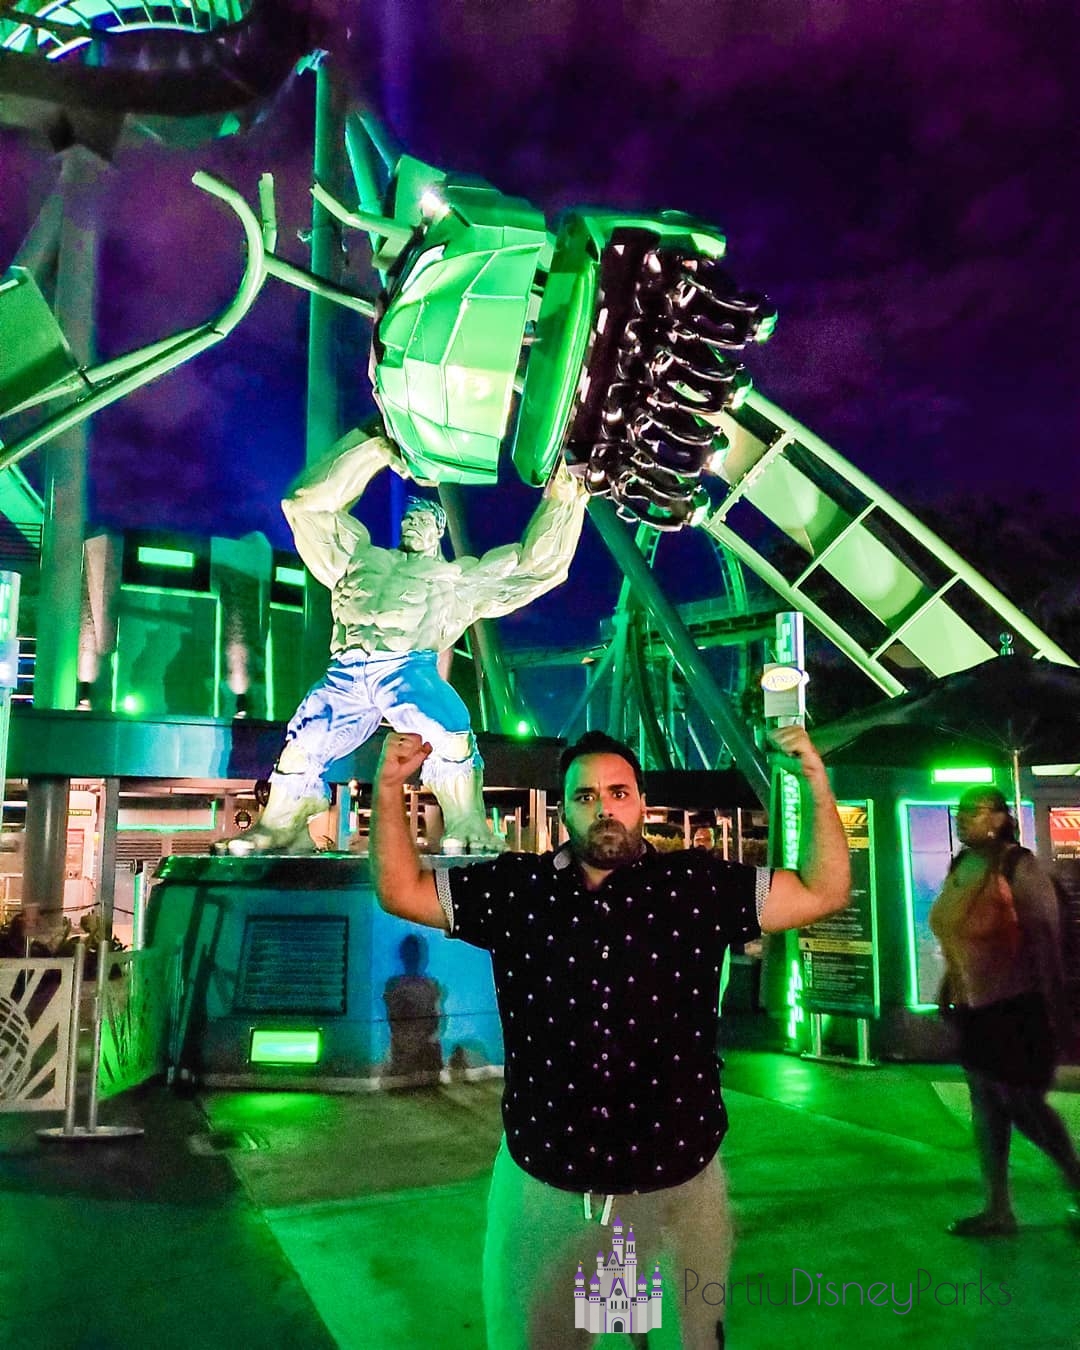 Carlos on the hulk- roller coaster